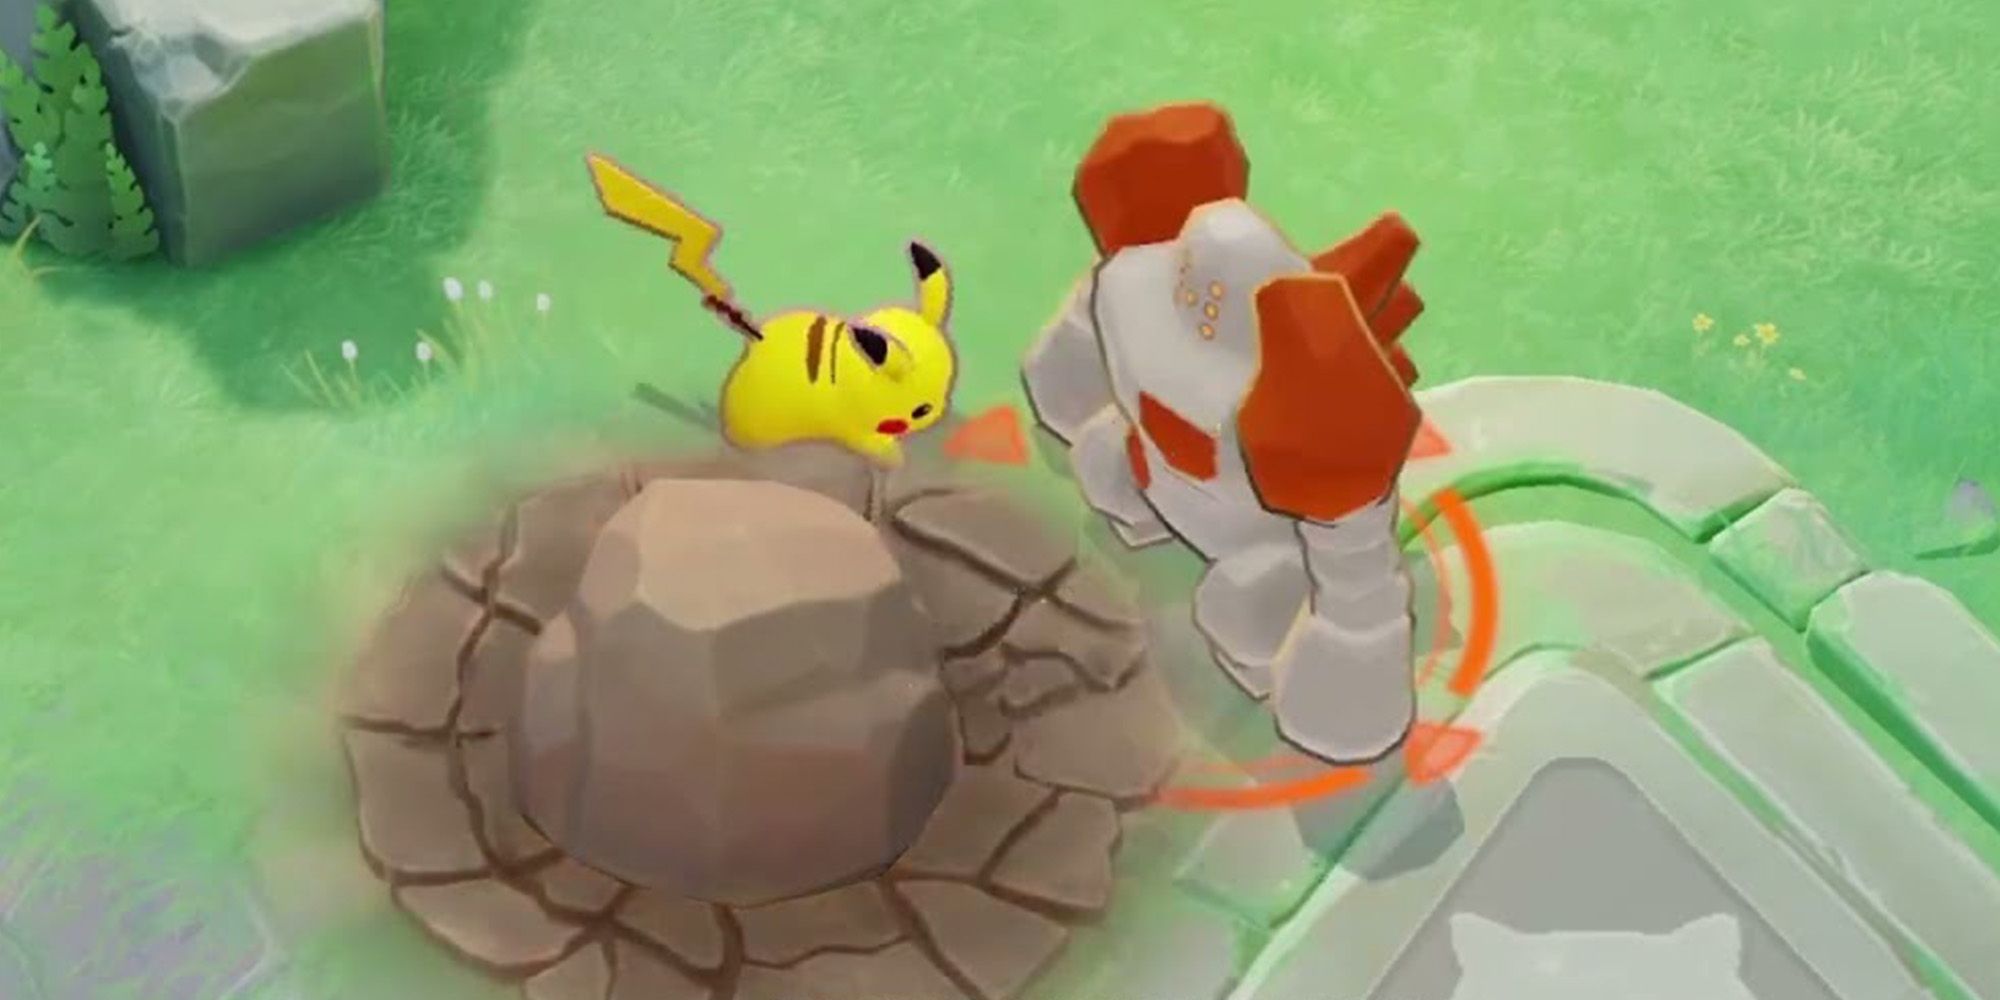 Pikachu attacking a regirock in pokemon unite